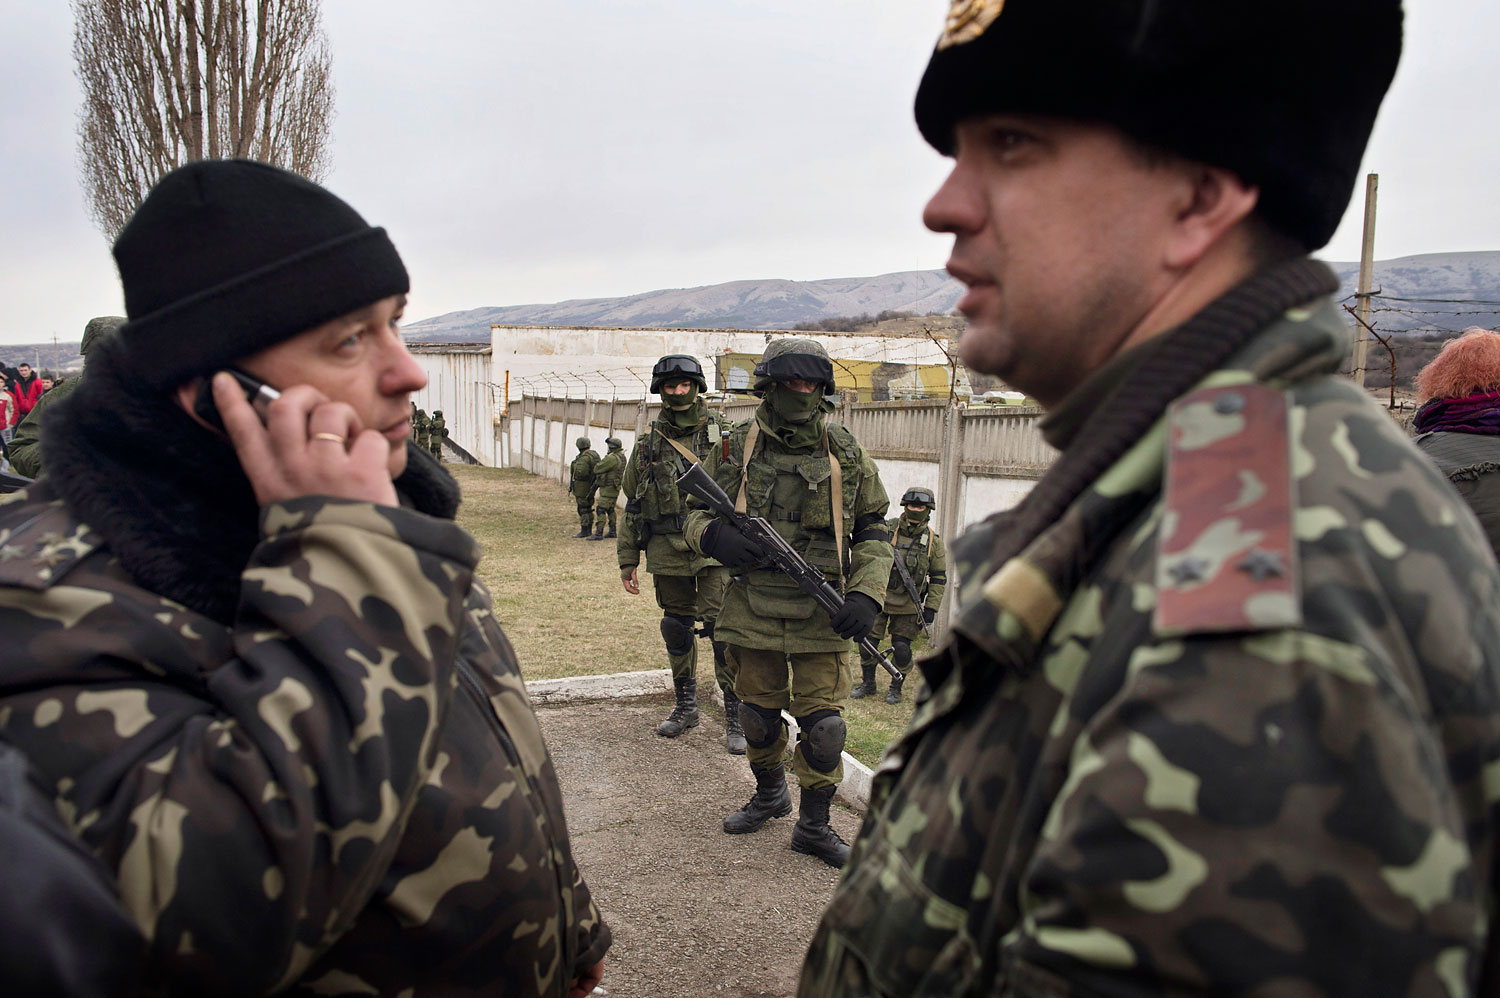 The Ukrainian commander, Col. Sergei Starozhenko, left, outside of his base in the Crimean village of Perevalnoye, on March 2, 2014. (Yuri Kozyrev—NOOR for TIME)